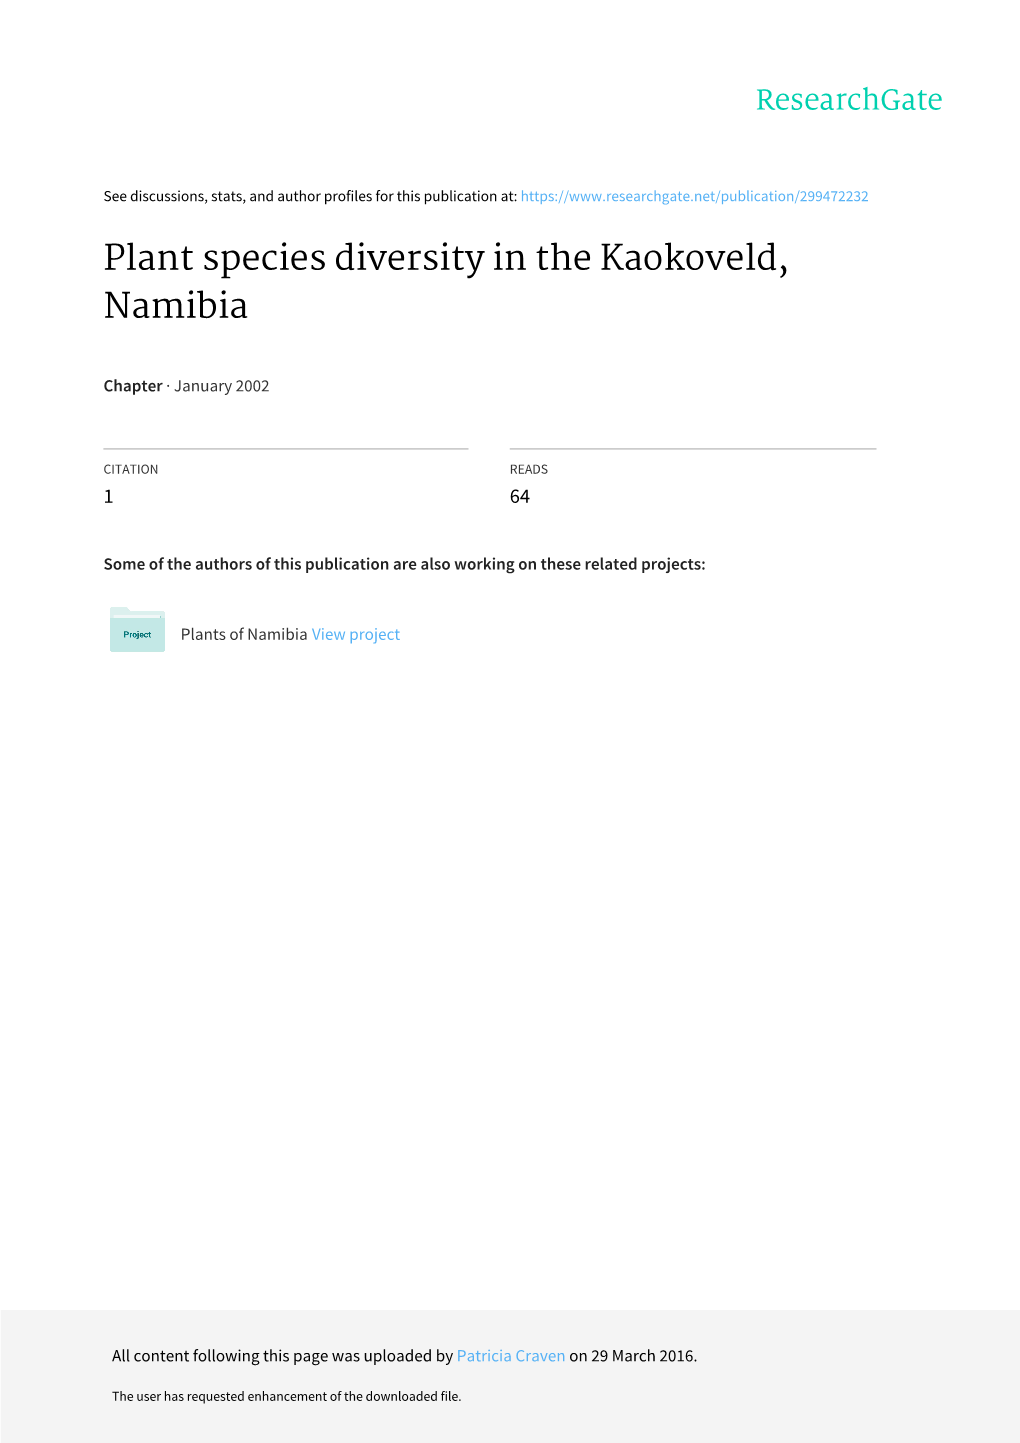 Plant Species Diversity in the Kaokoveld, Namibia